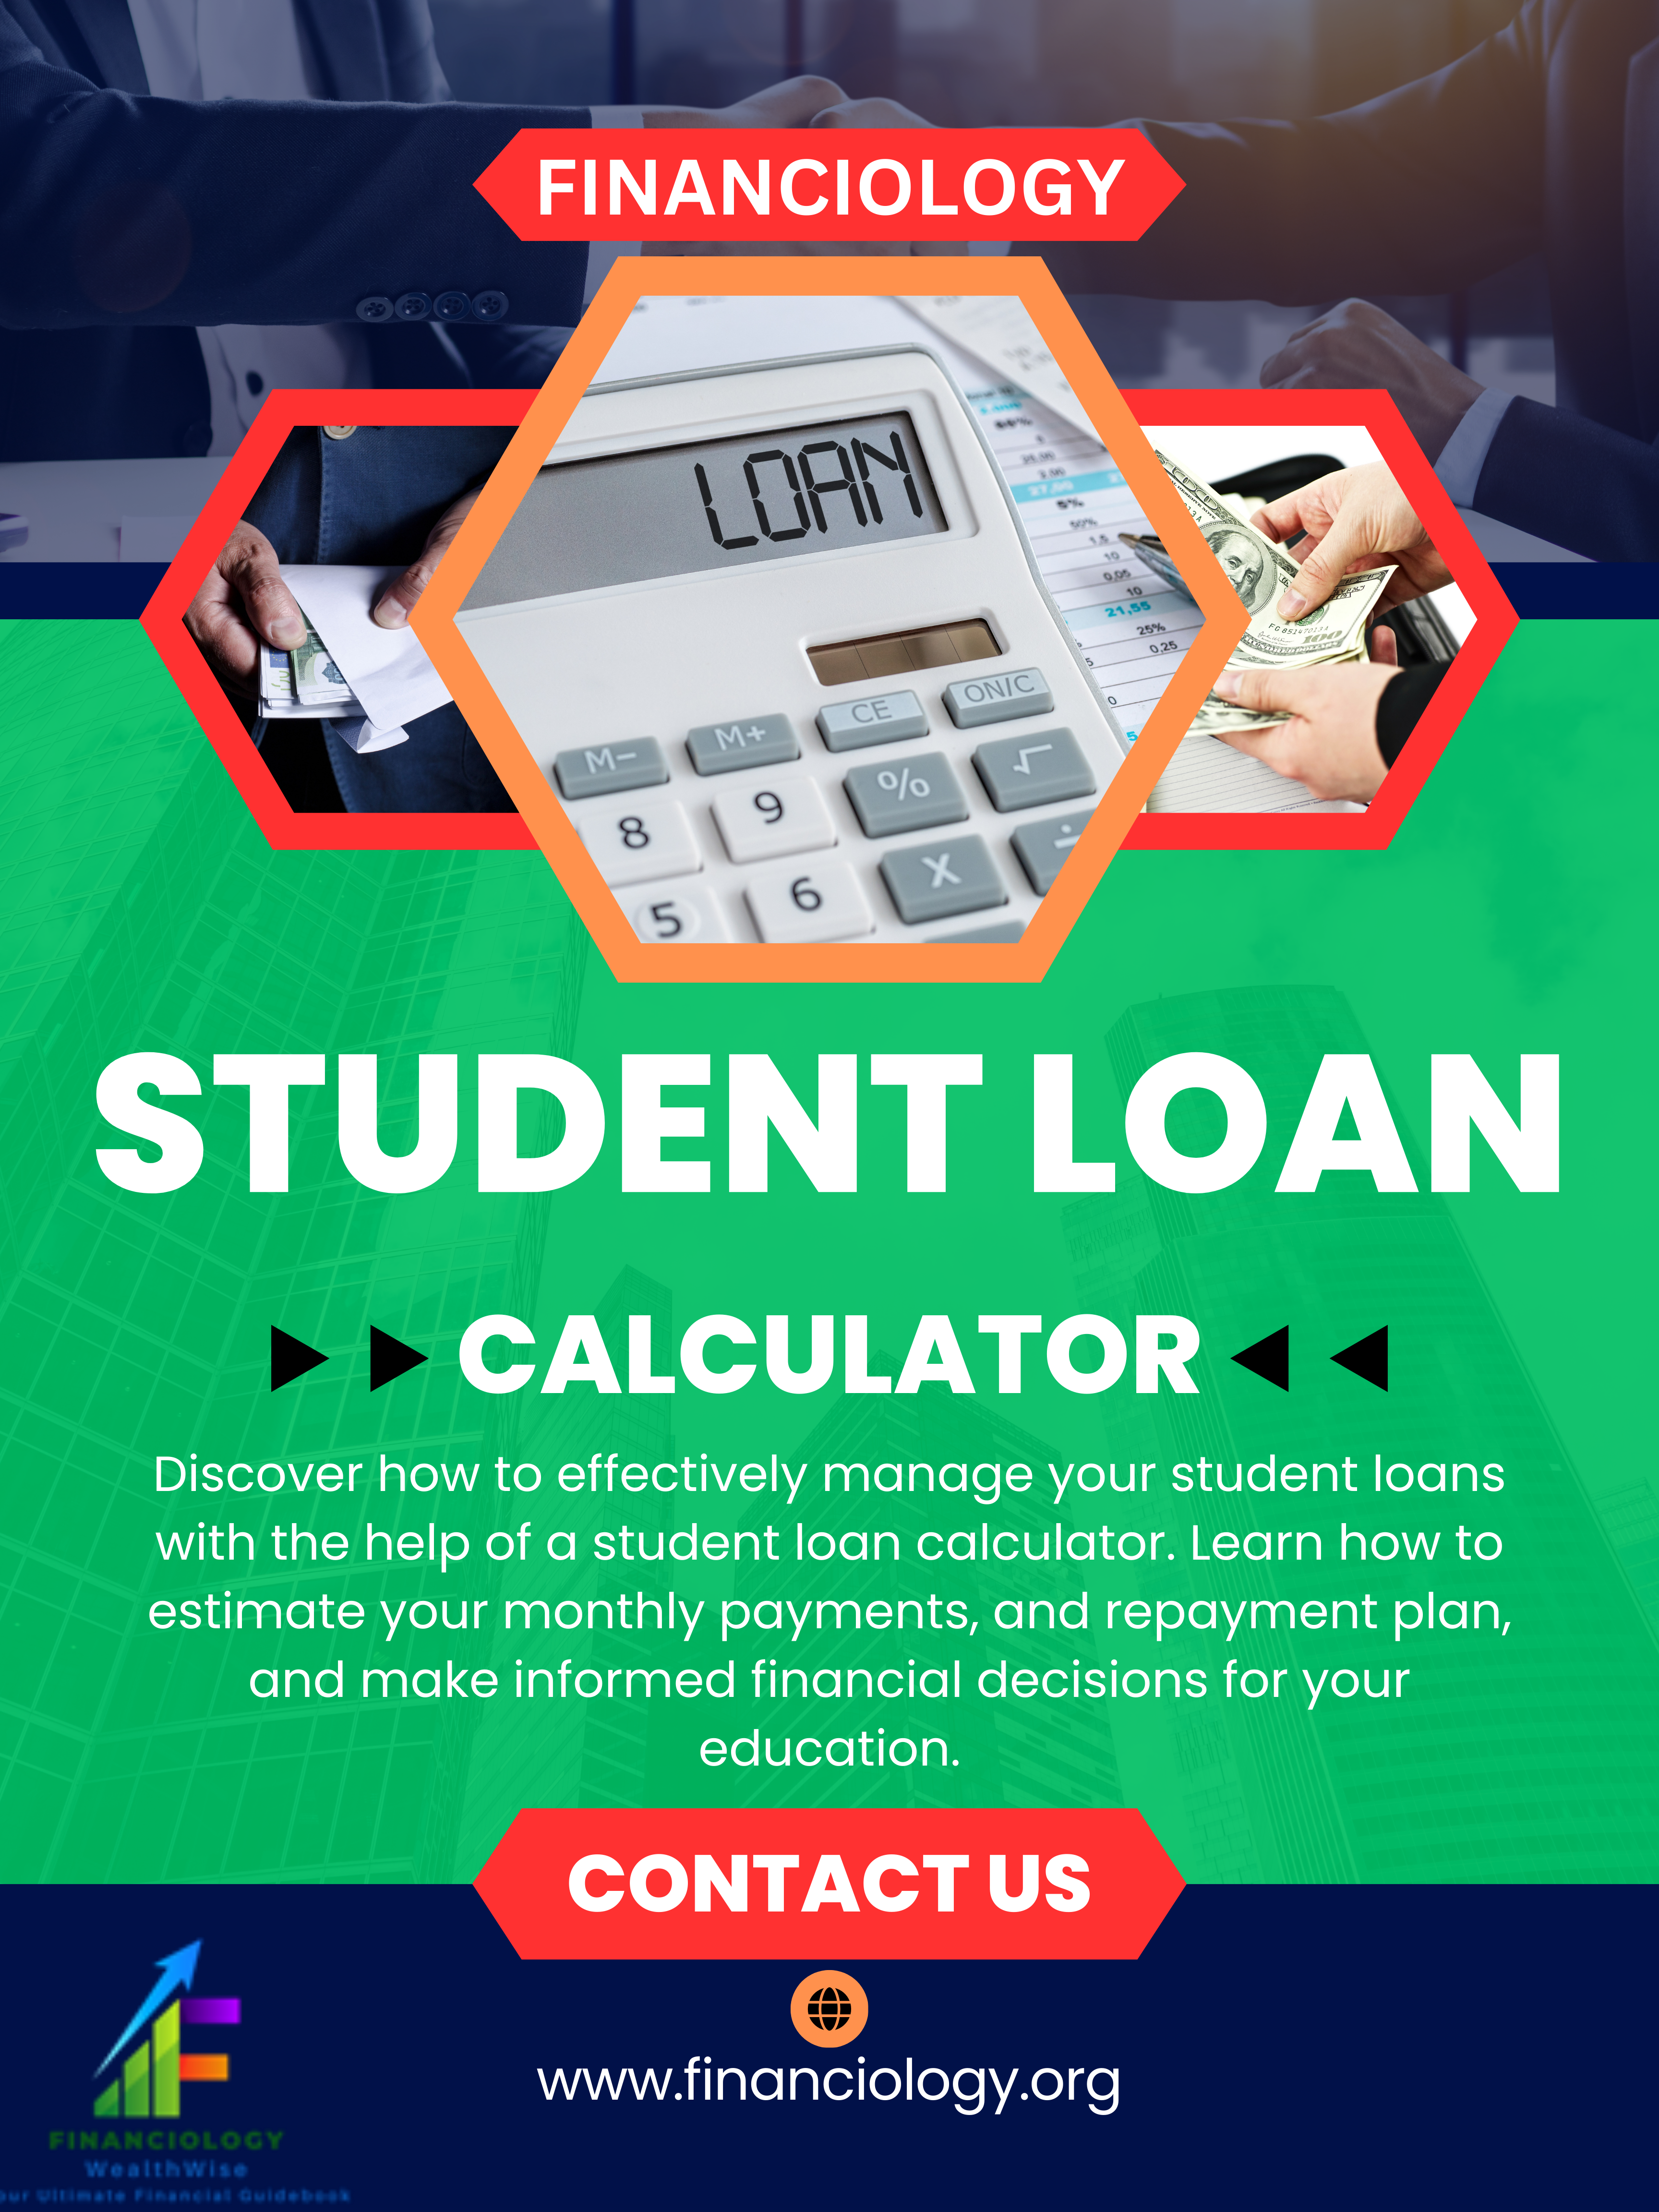 student loan refinance calculator; student loan refinancing calculator; student loan calculator; student loan payment calculator; student loan; financiology; financiology.org;